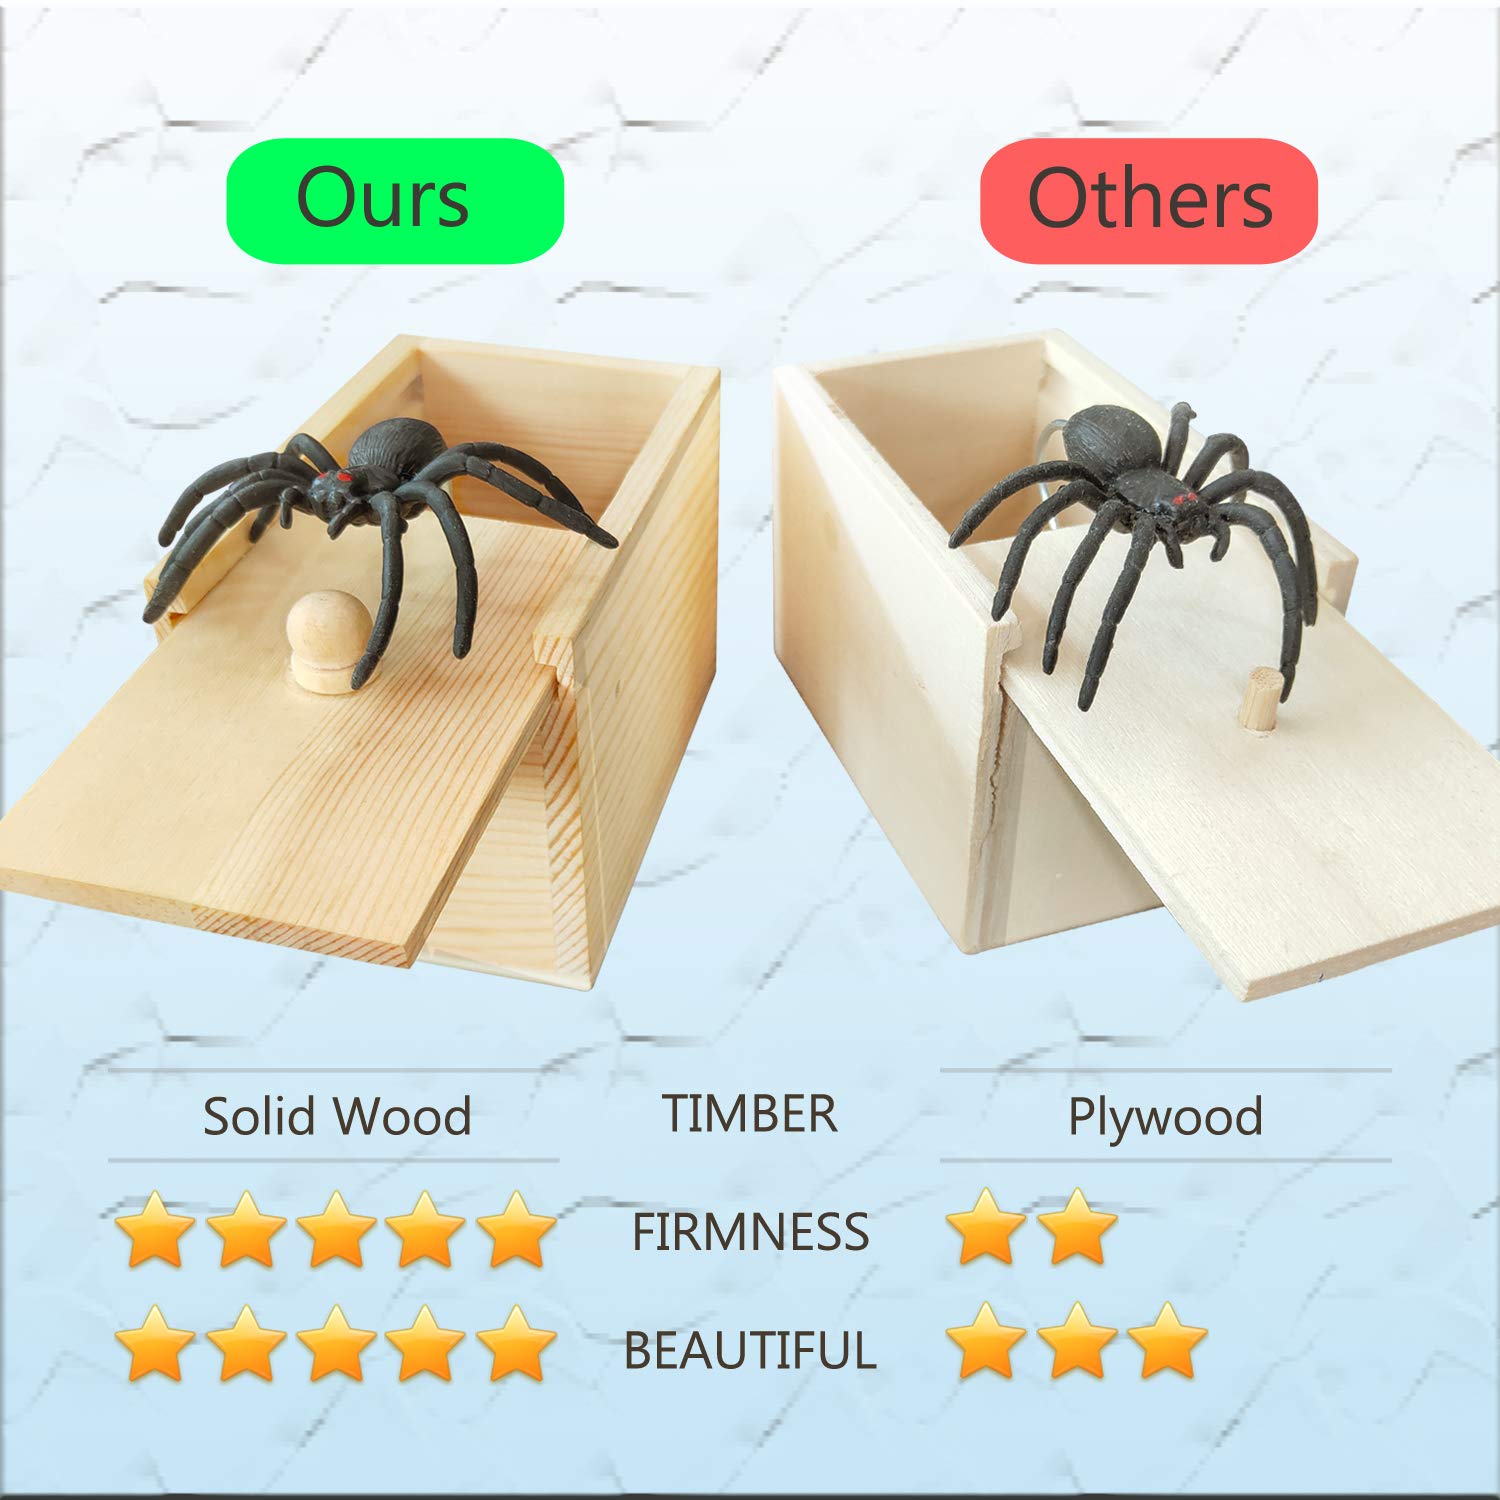 PARNIXS Rubber Spider Prank Box，Handcrafted Wooden Surprise Box Prank, Spider Money Surprise Box Fun Practical Surprise Joke Boxes